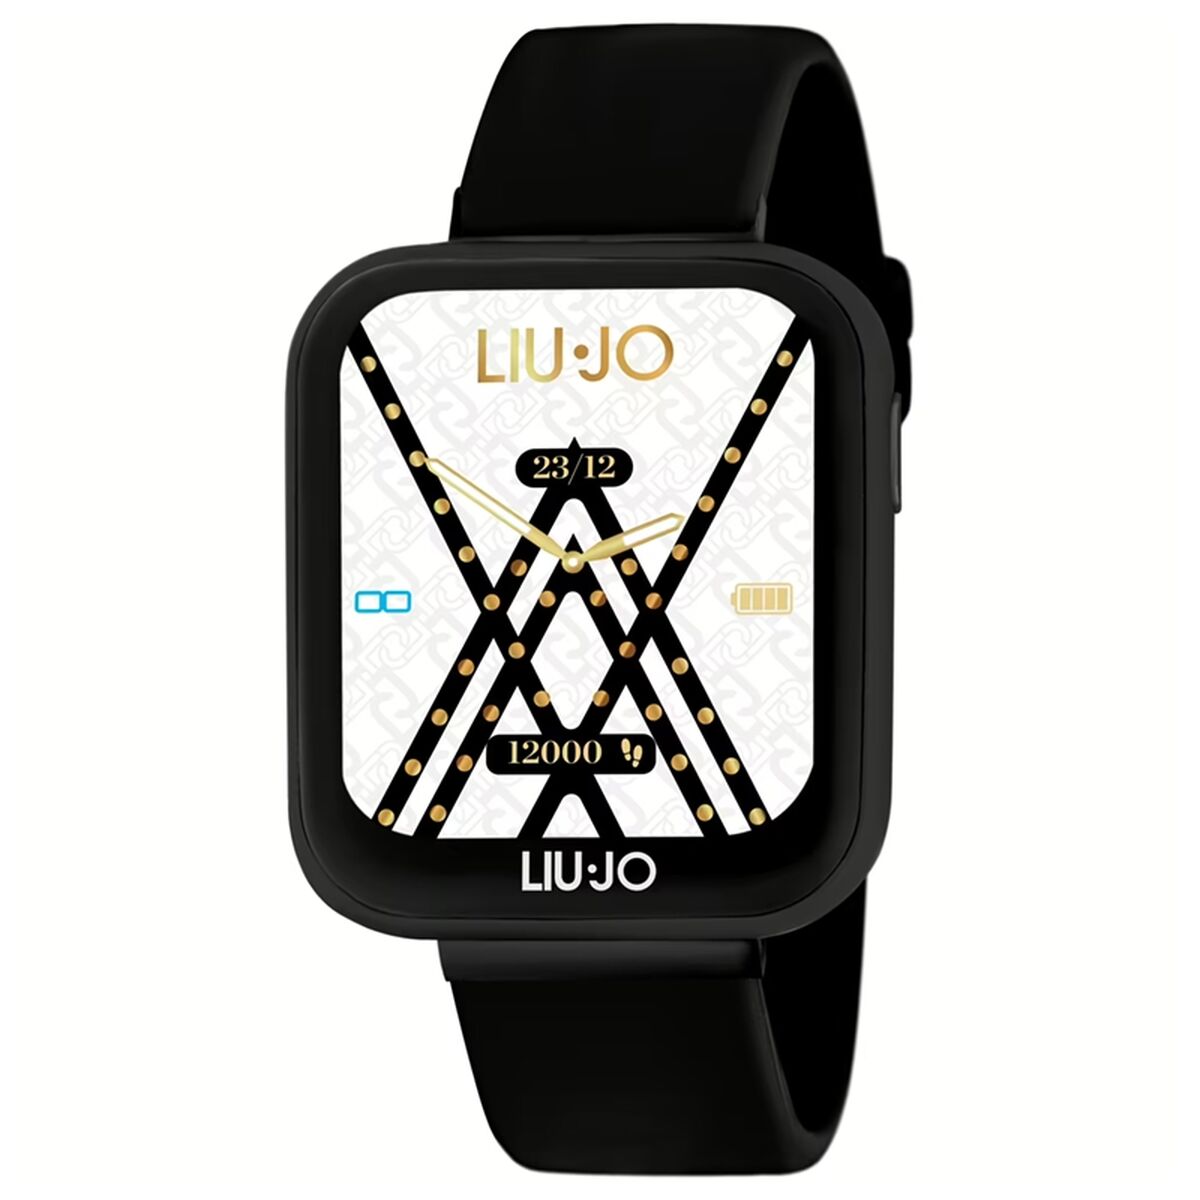 Kaufe Smartwatch LIU JO SWLJ107 bei AWK Flagship um € 166.00